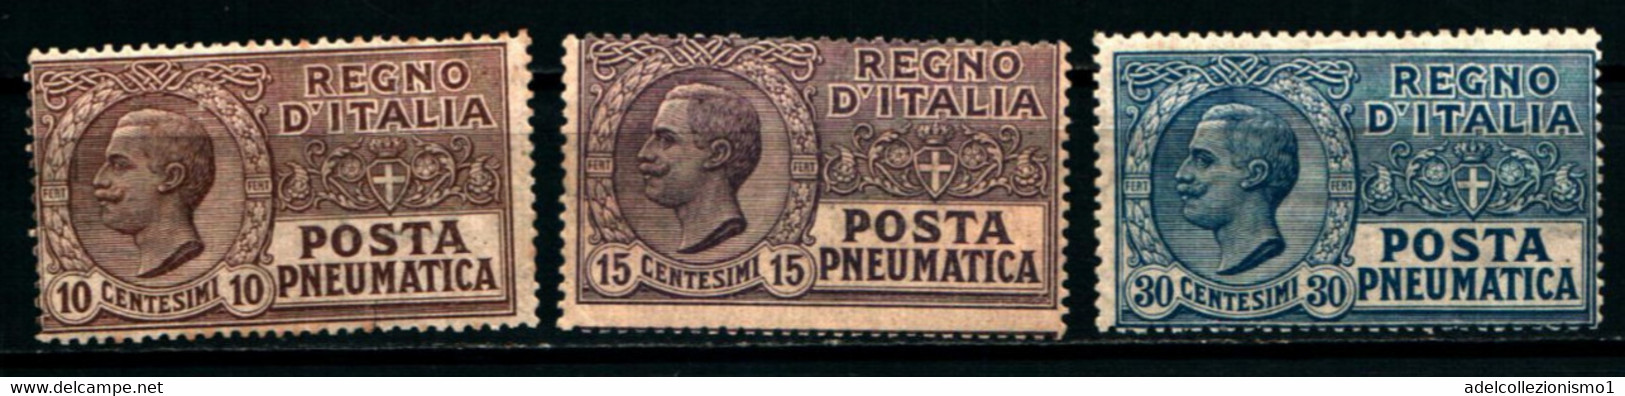 40174) ITALIA-Pneumatica Tipo Leoni - POSTA PNEUMATICA - 1913/1923 SERIE COMPLETA- MLH* - Pneumatic Mail